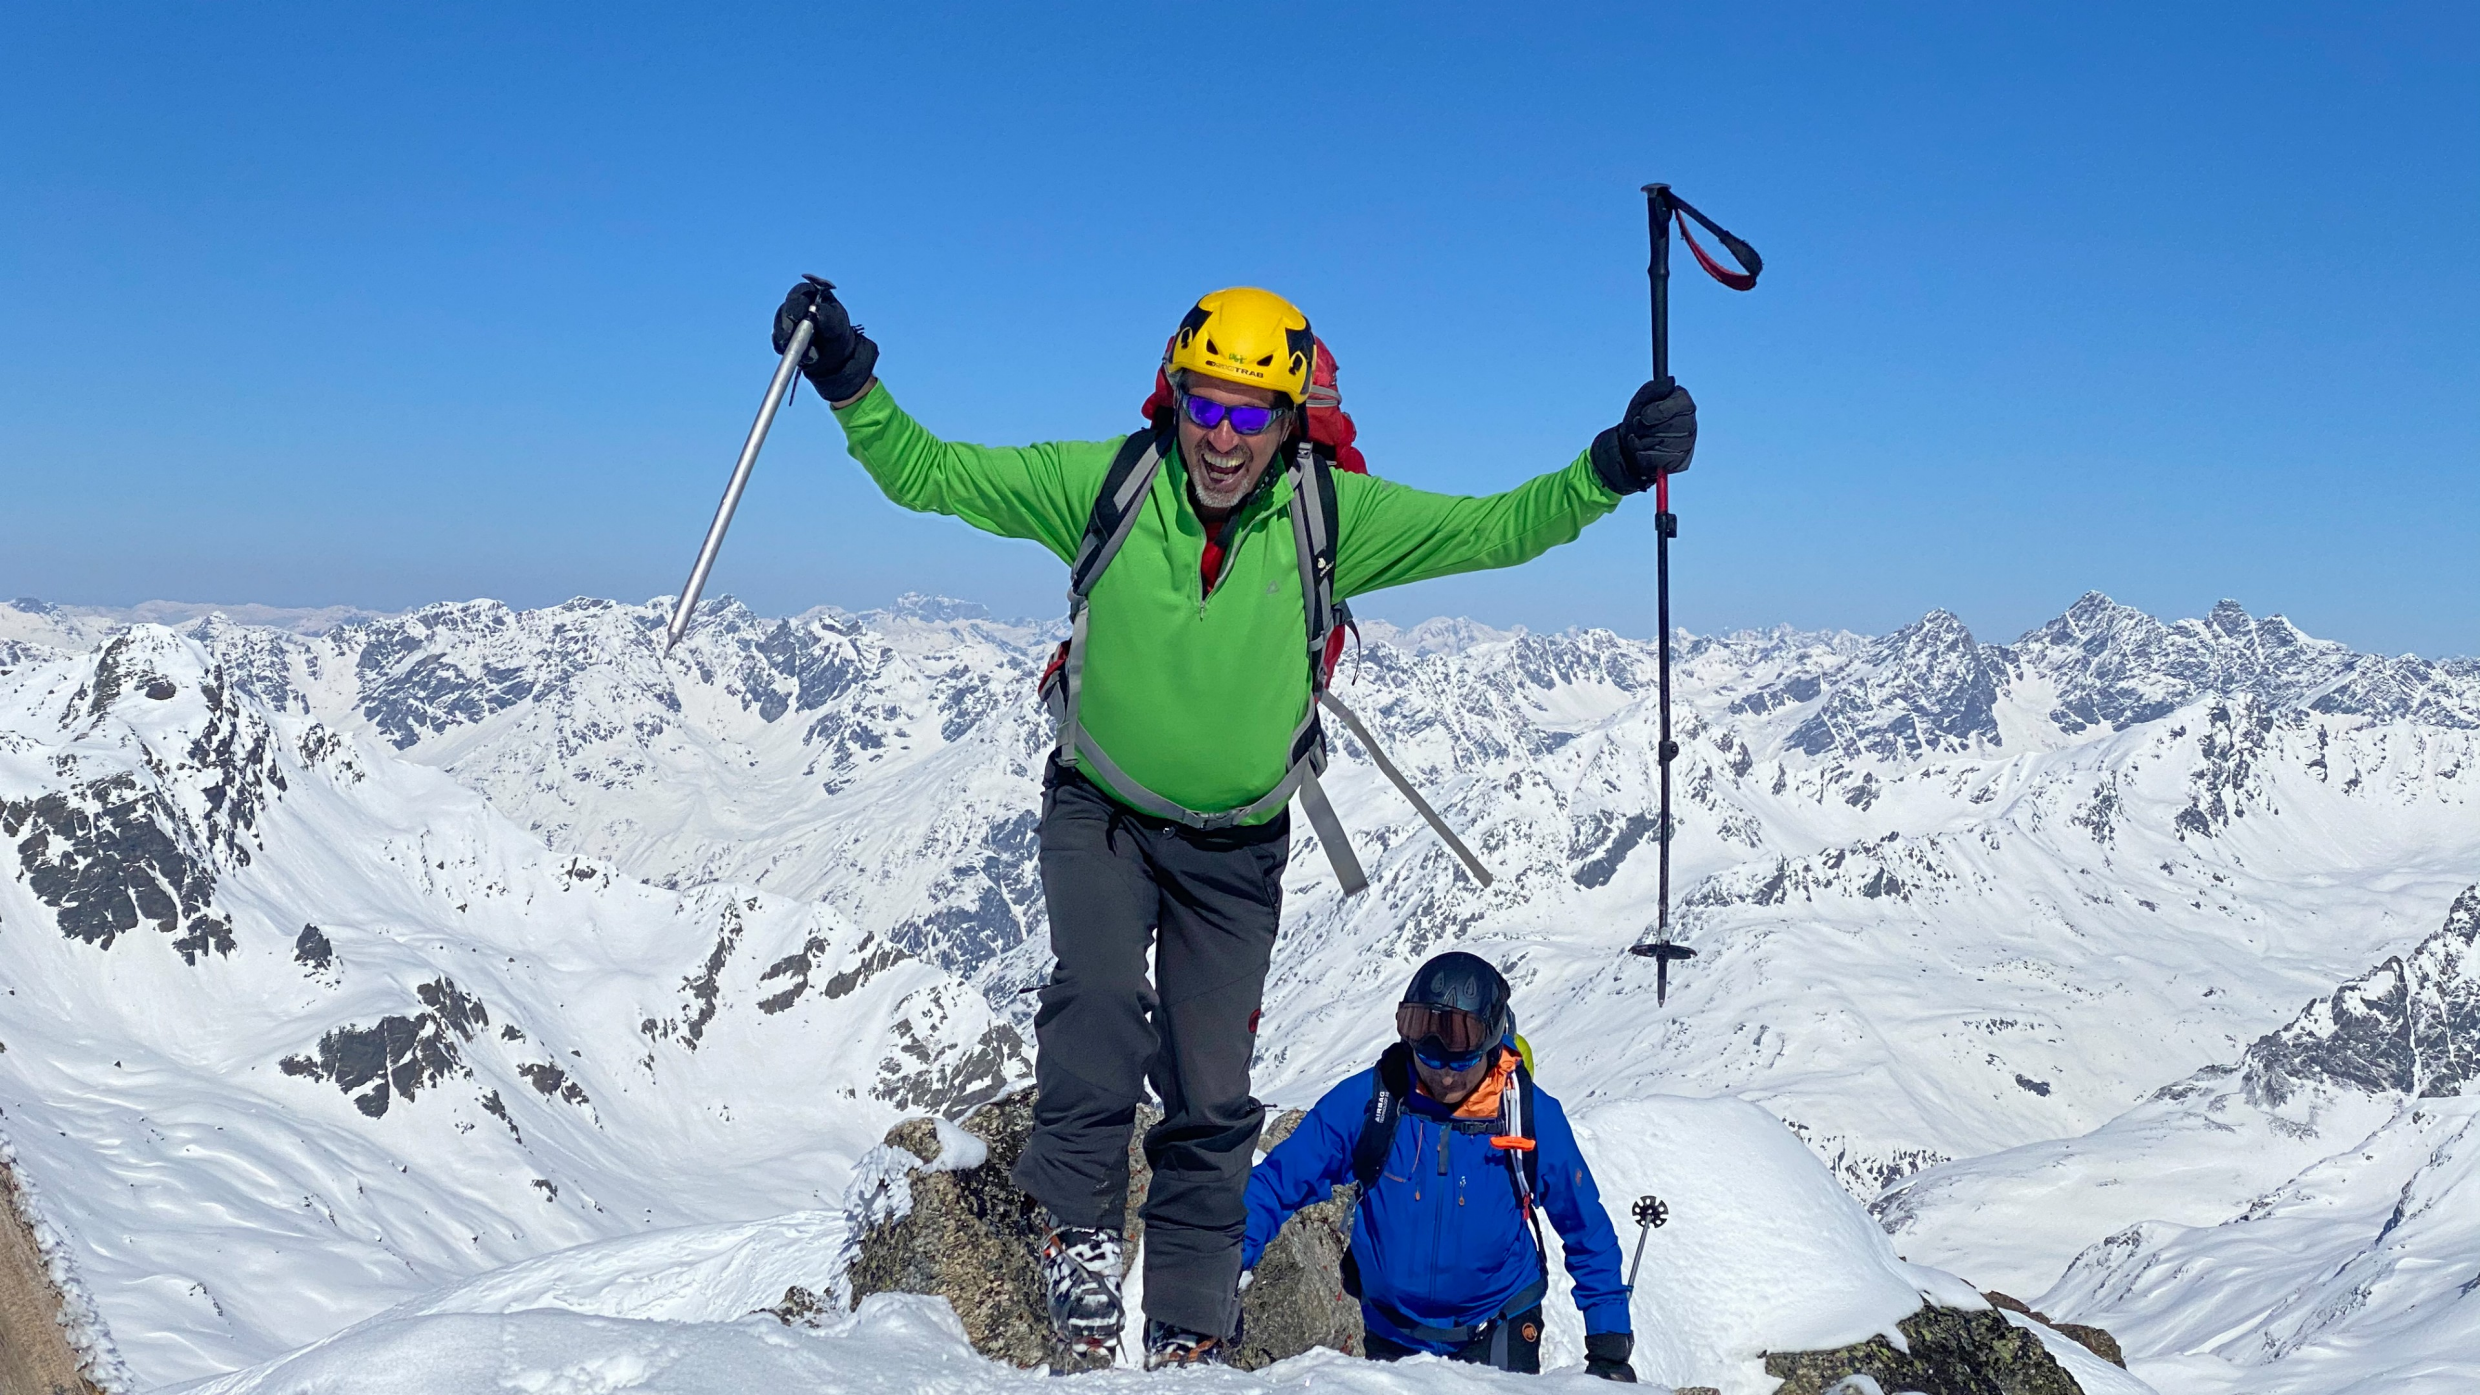 Berg+Ski: Freude herrscht bei der Ankunft auf dem Flüela Wisshorn